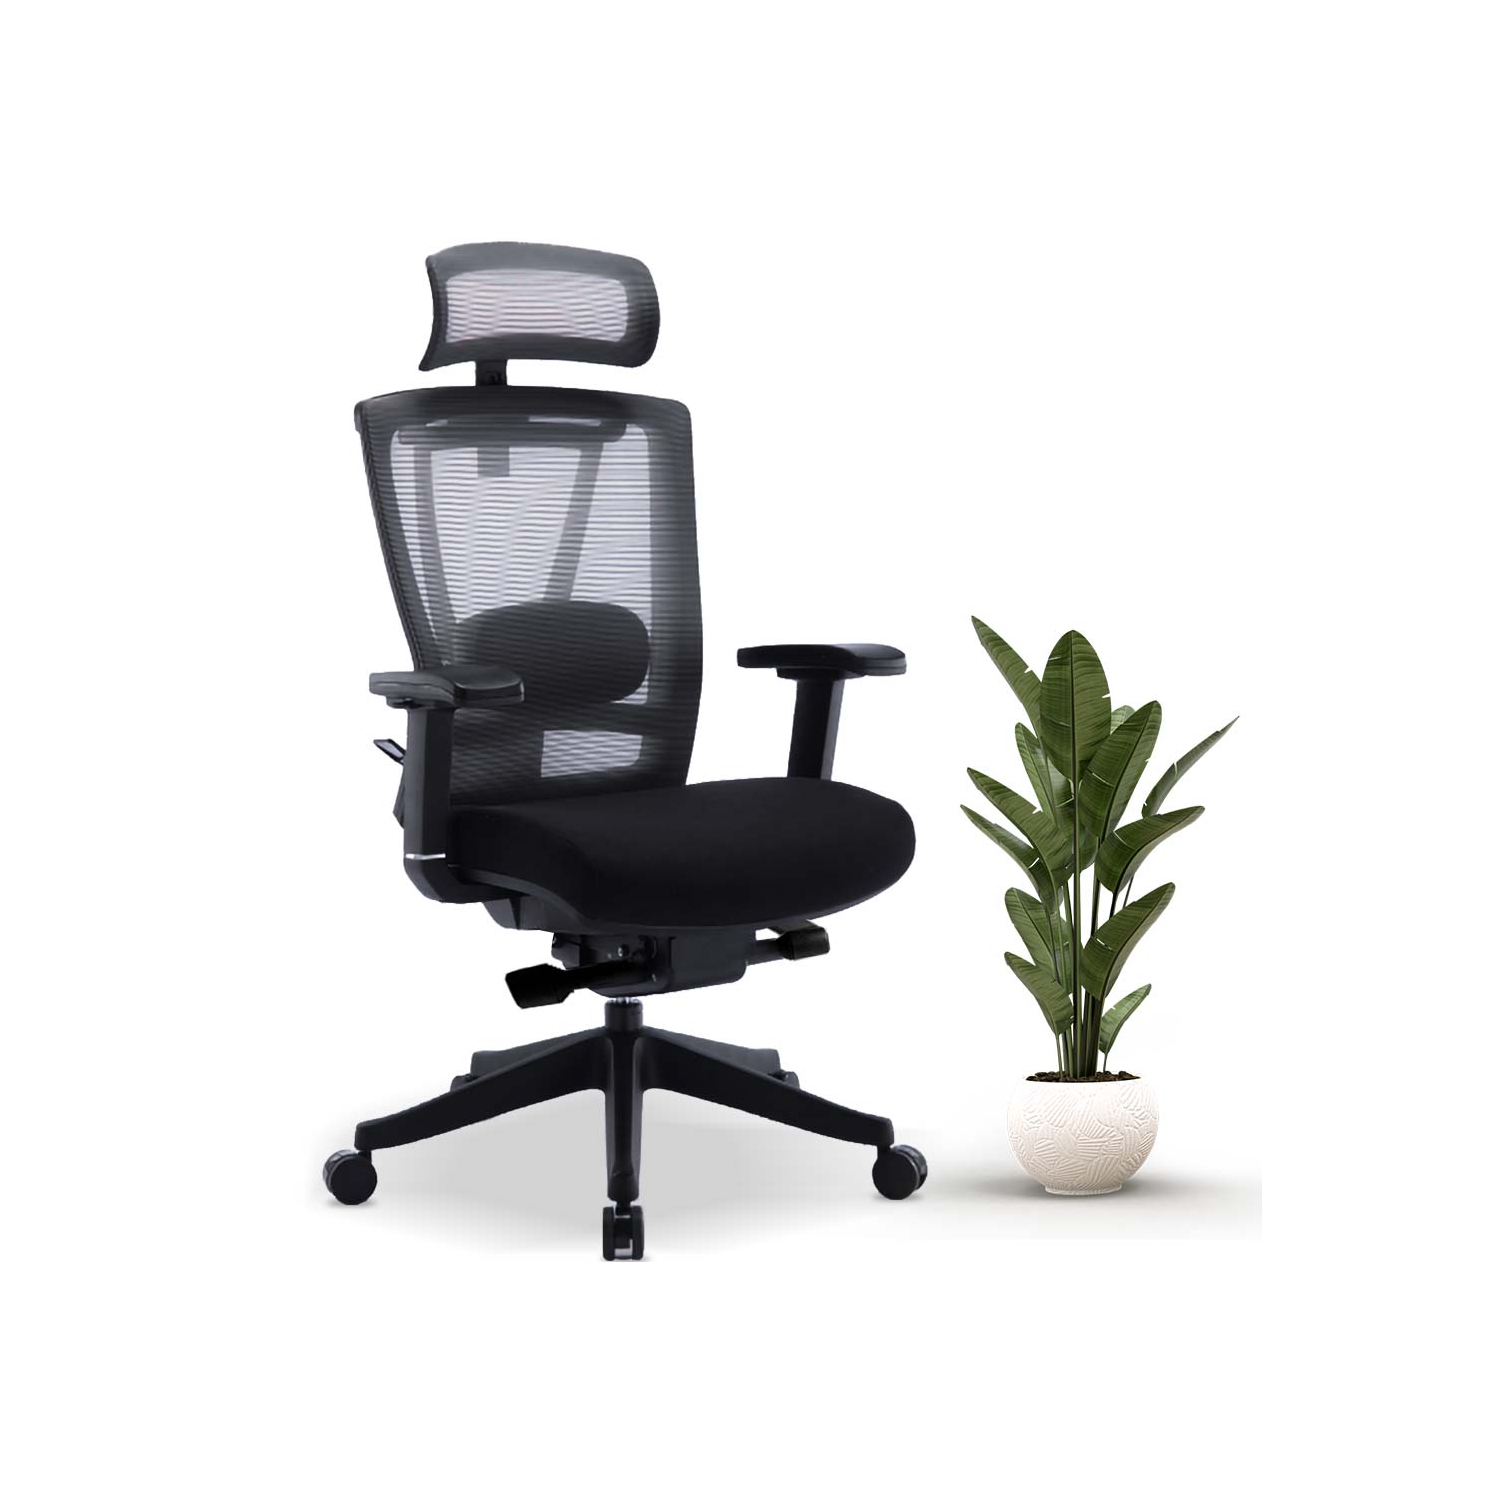 MotionGrey Cloud Mesh Series Executive Ergonomic Computer Desk Home Office Chair with 4D Armrest & Lumbar Support - Black